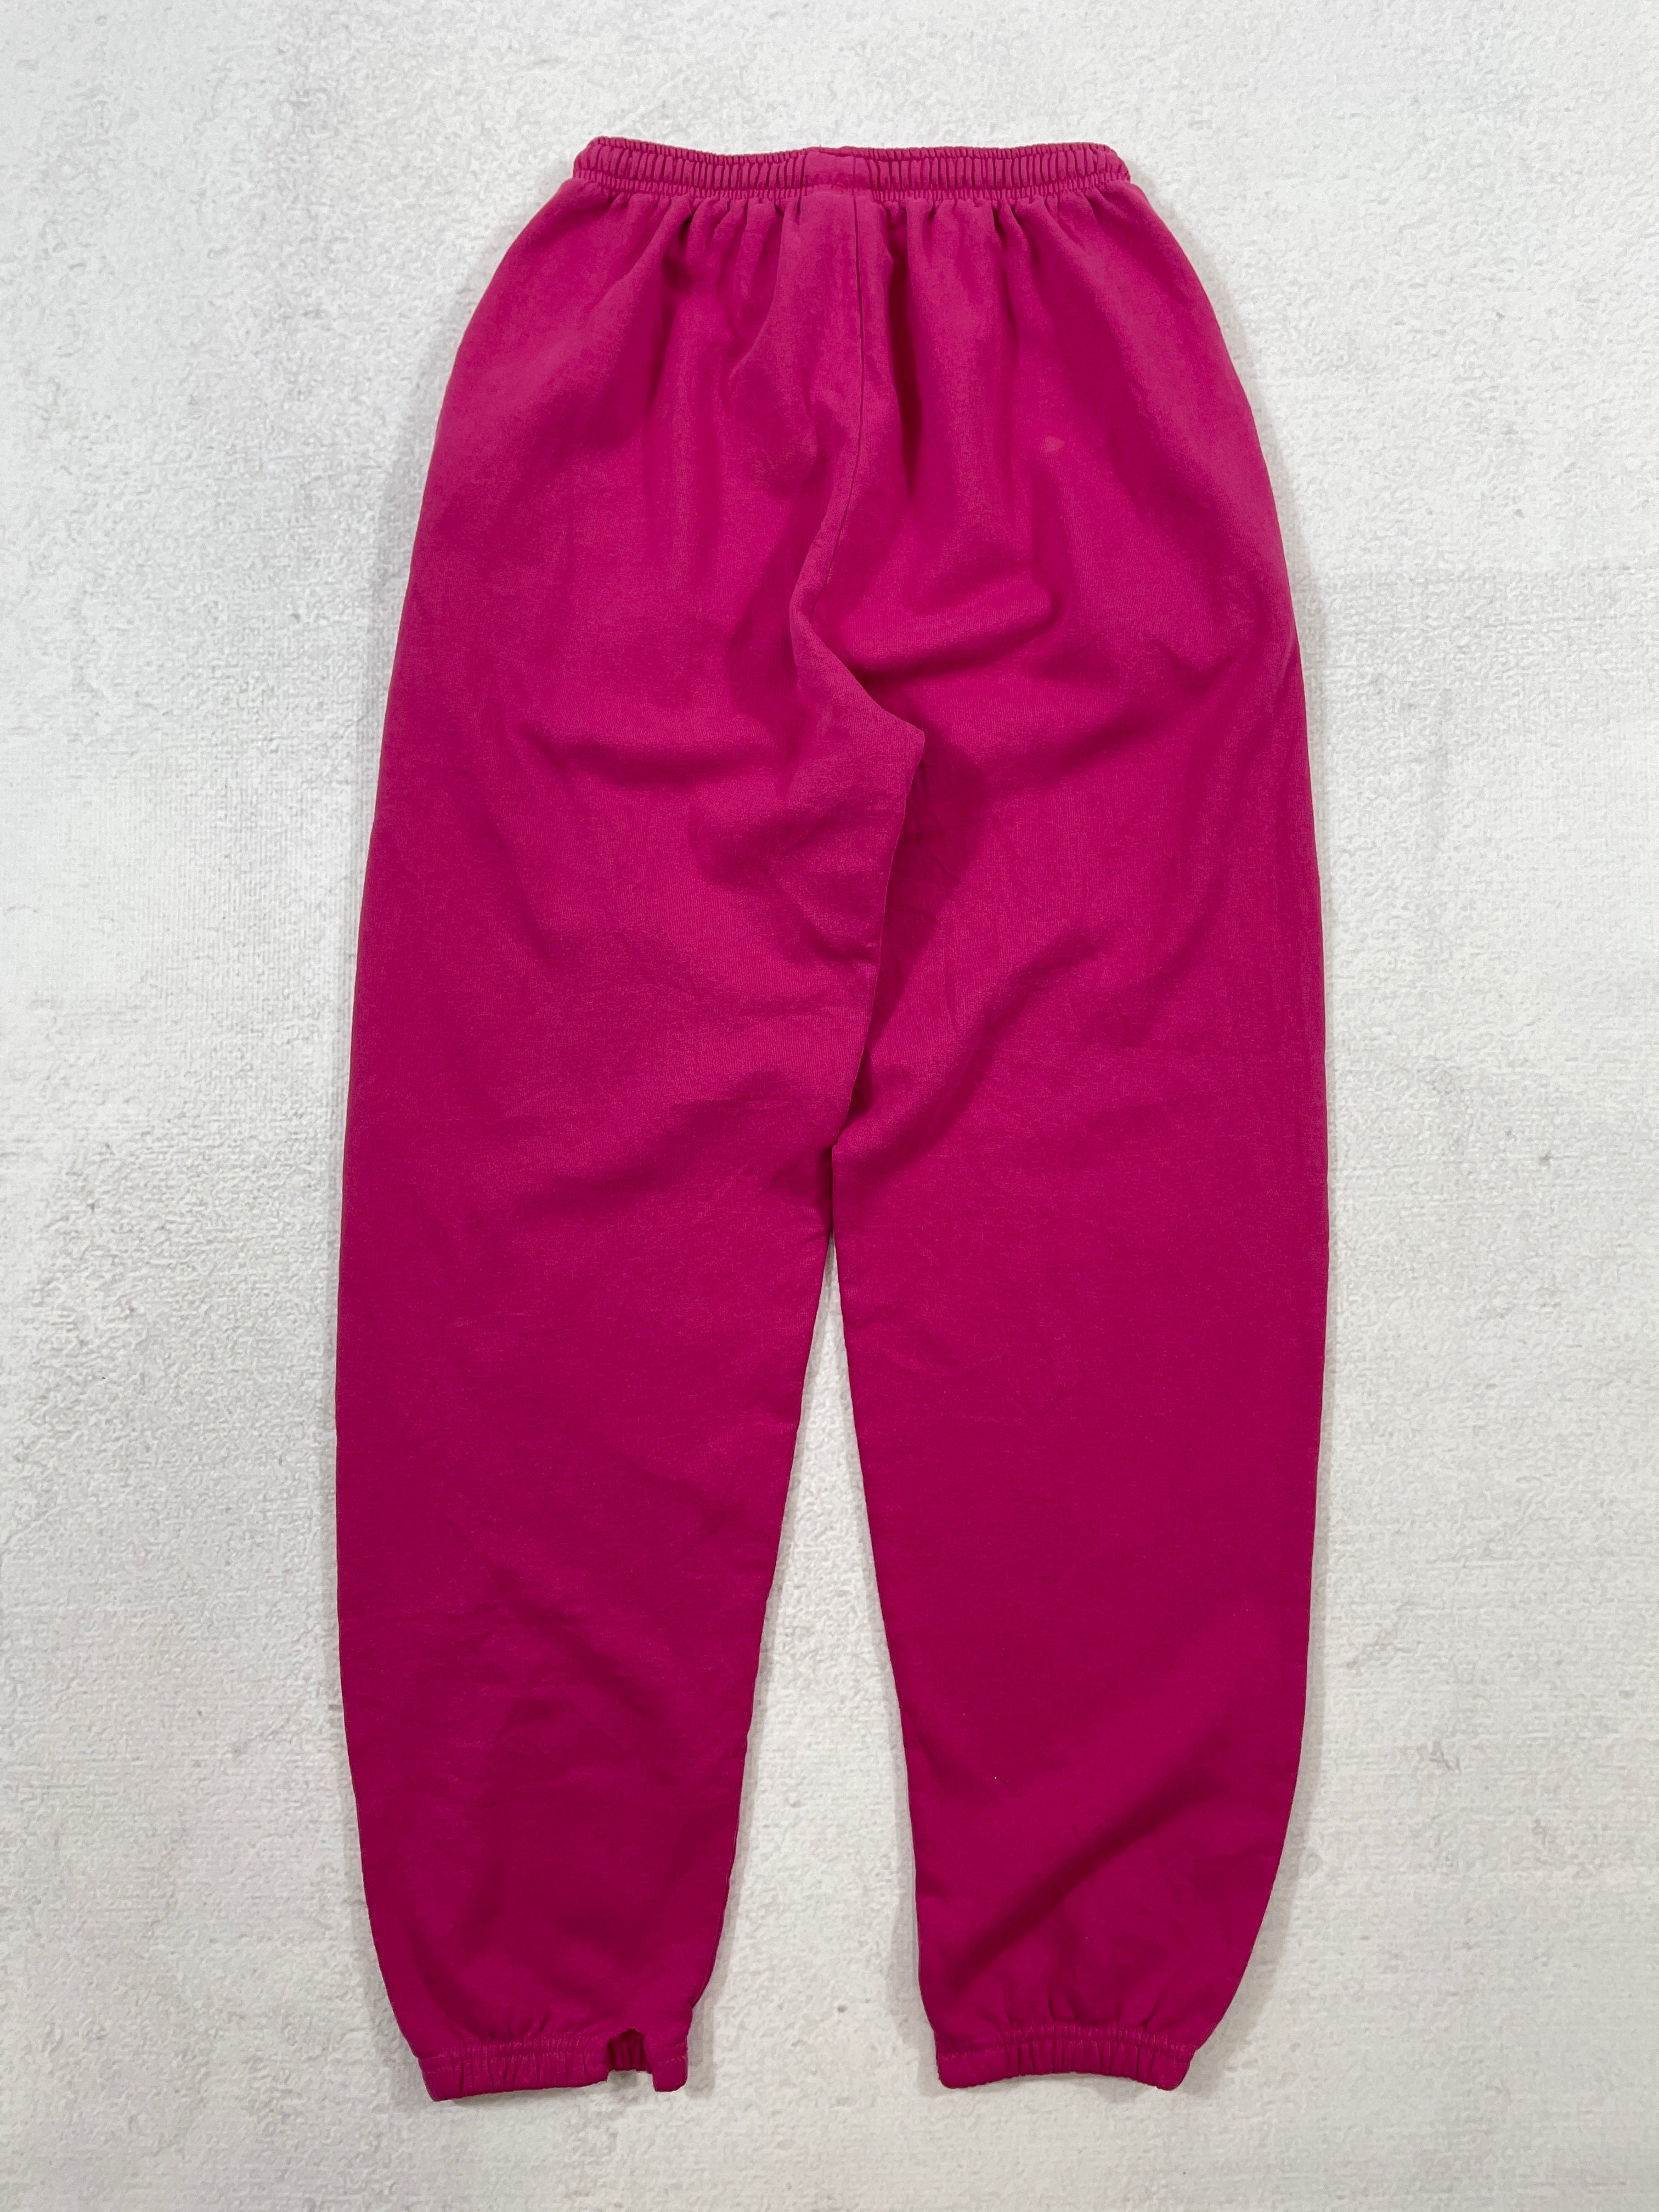 Vintage Champion Pace University Cuffed Sweatpants - Women's Medium